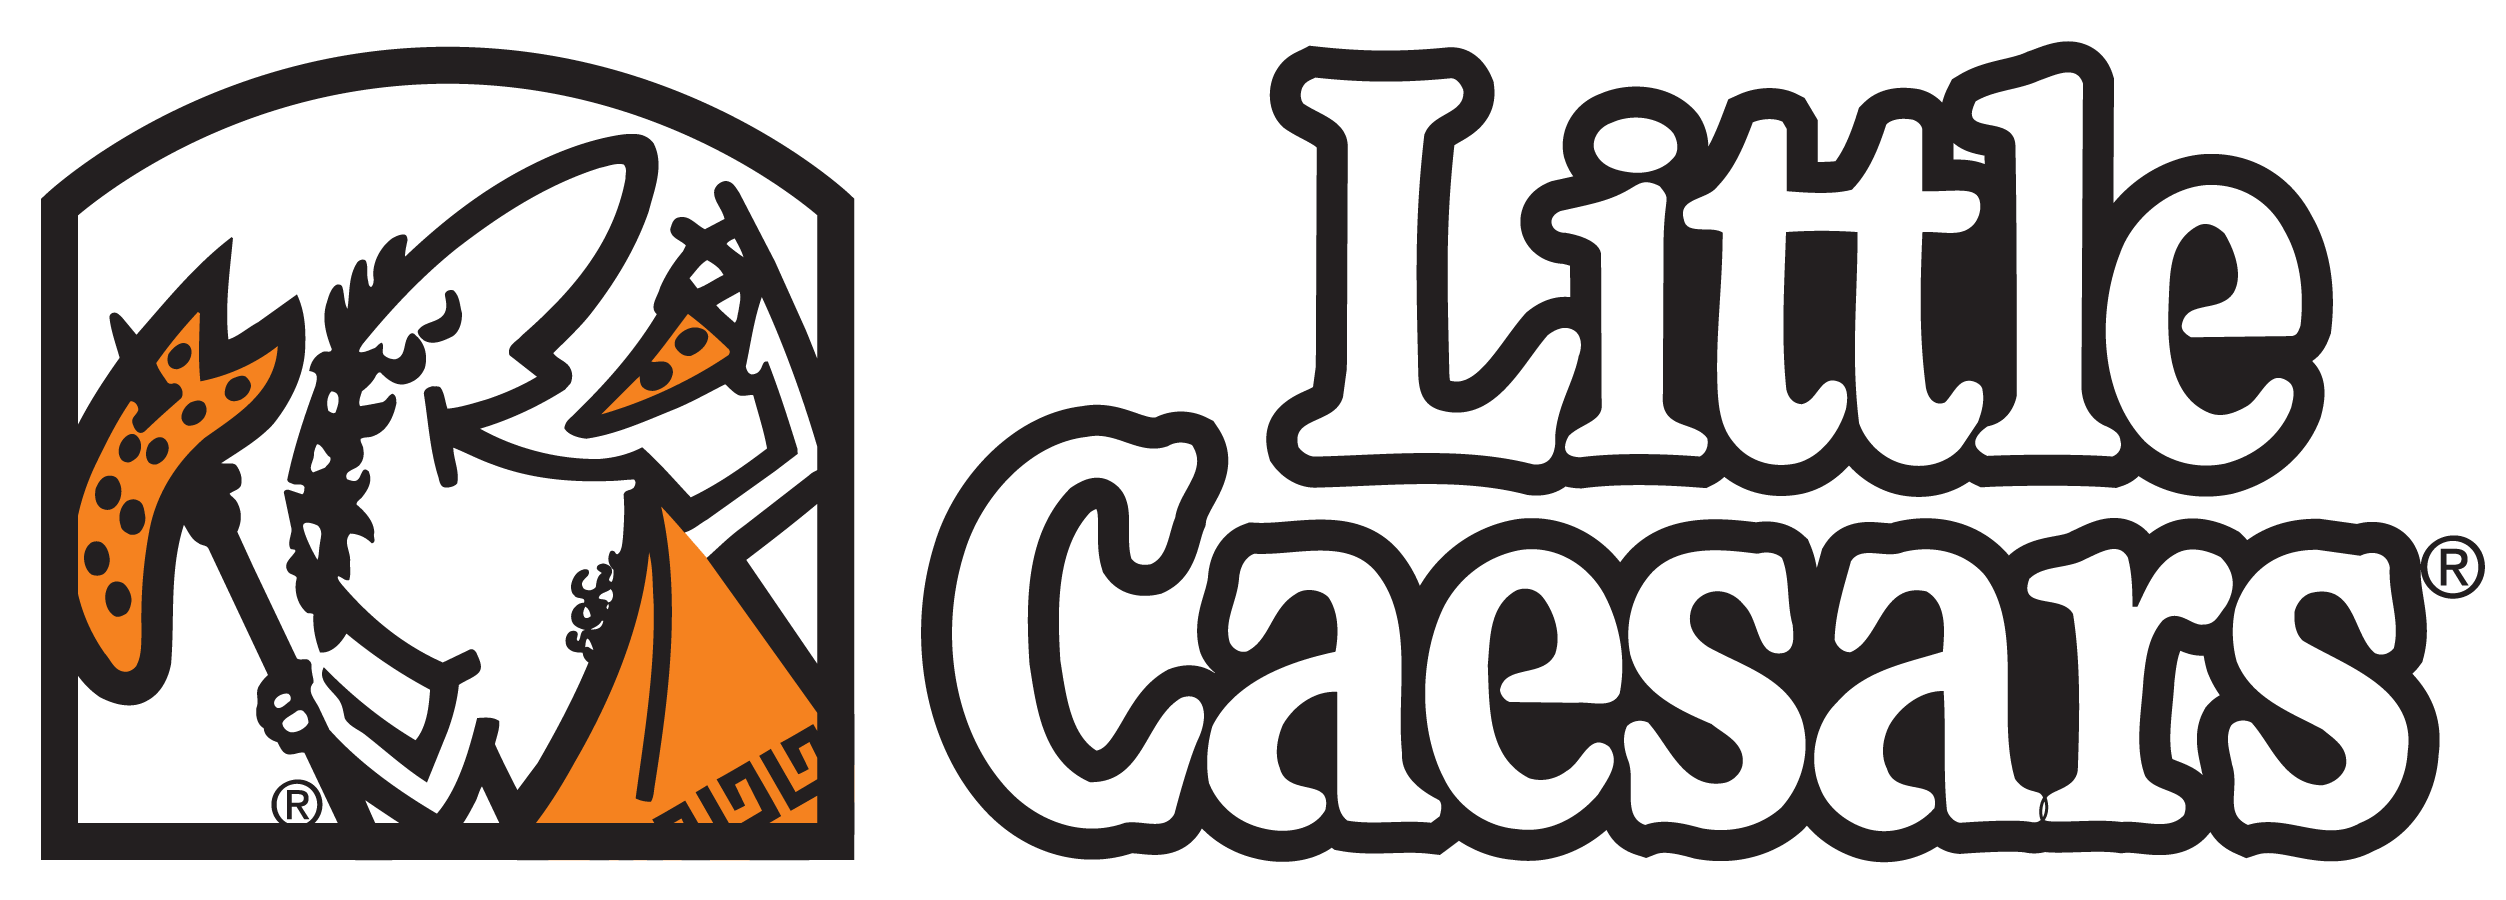 Little Ceasars Logo - Little caesars pizza Logos